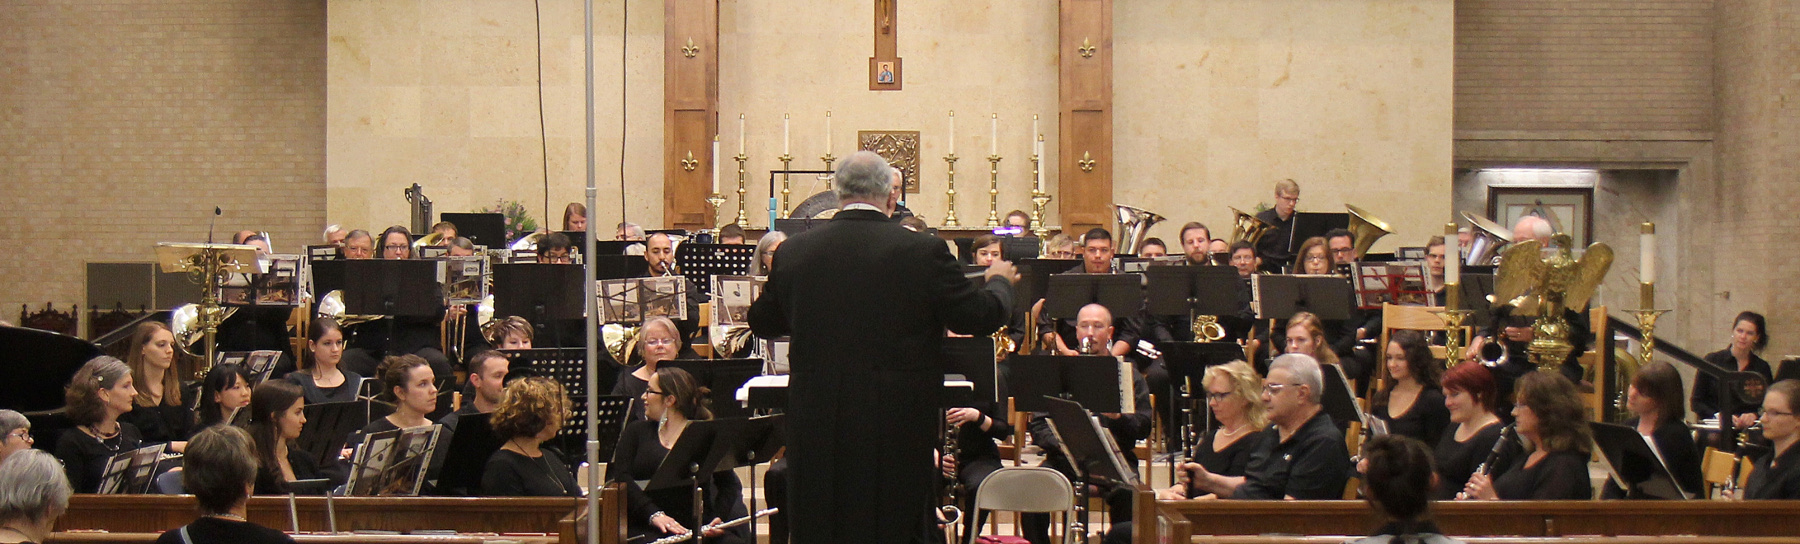 Concert at St. Louis Catholic Church